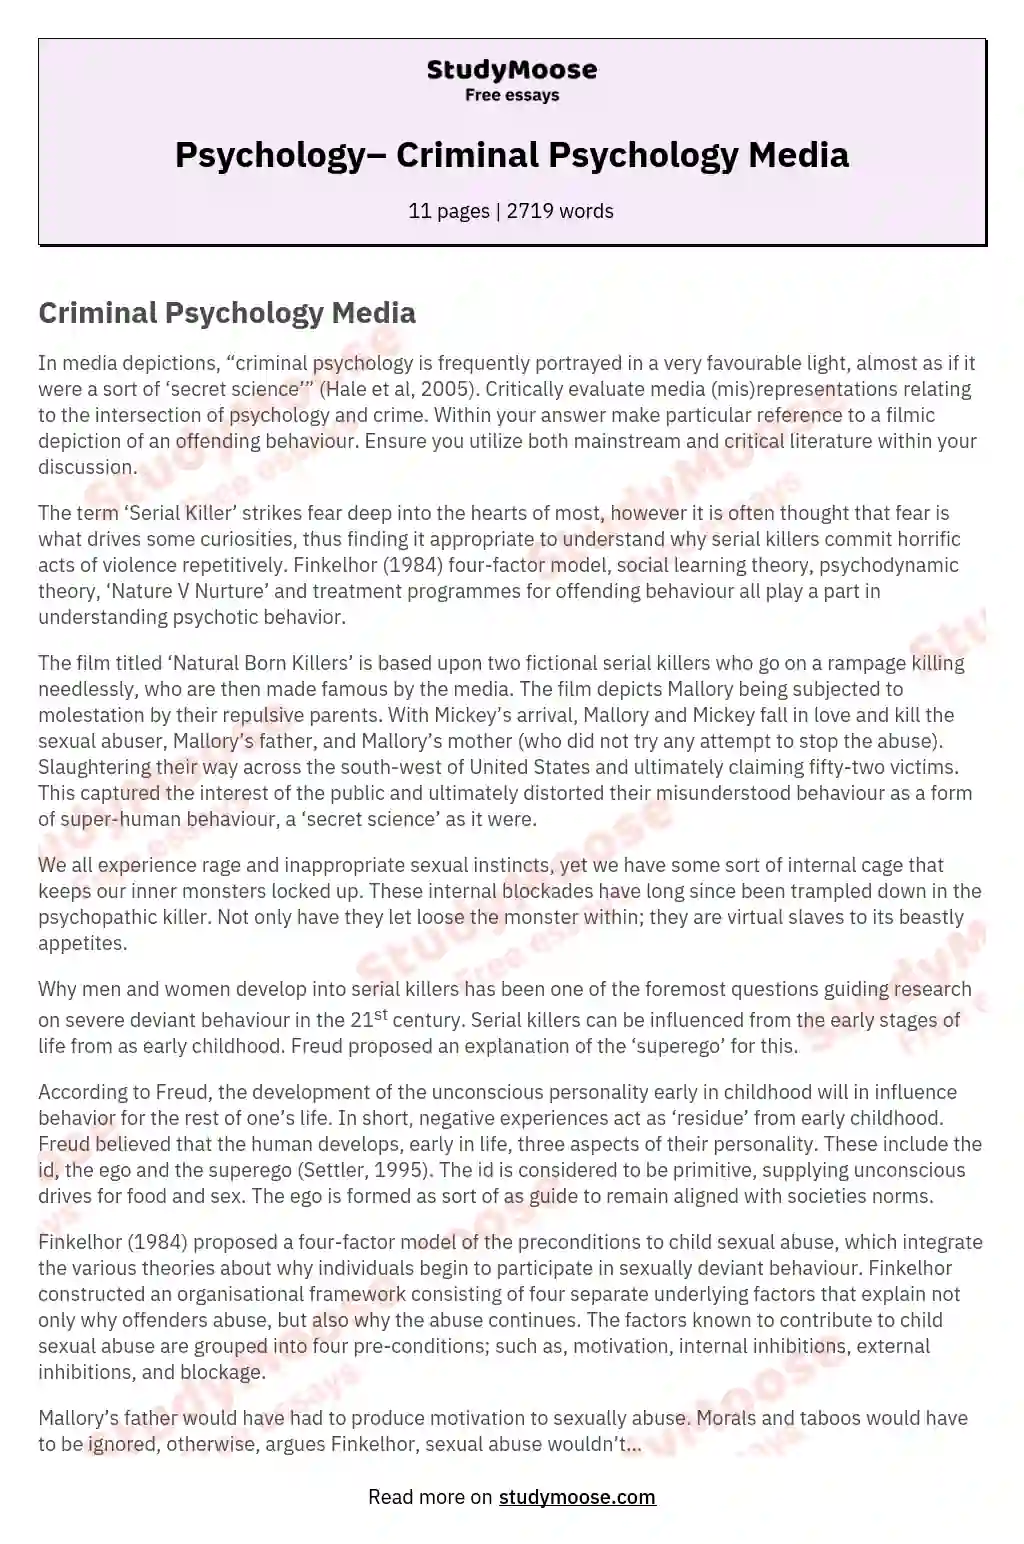 Psychology– Criminal Psychology Media essay